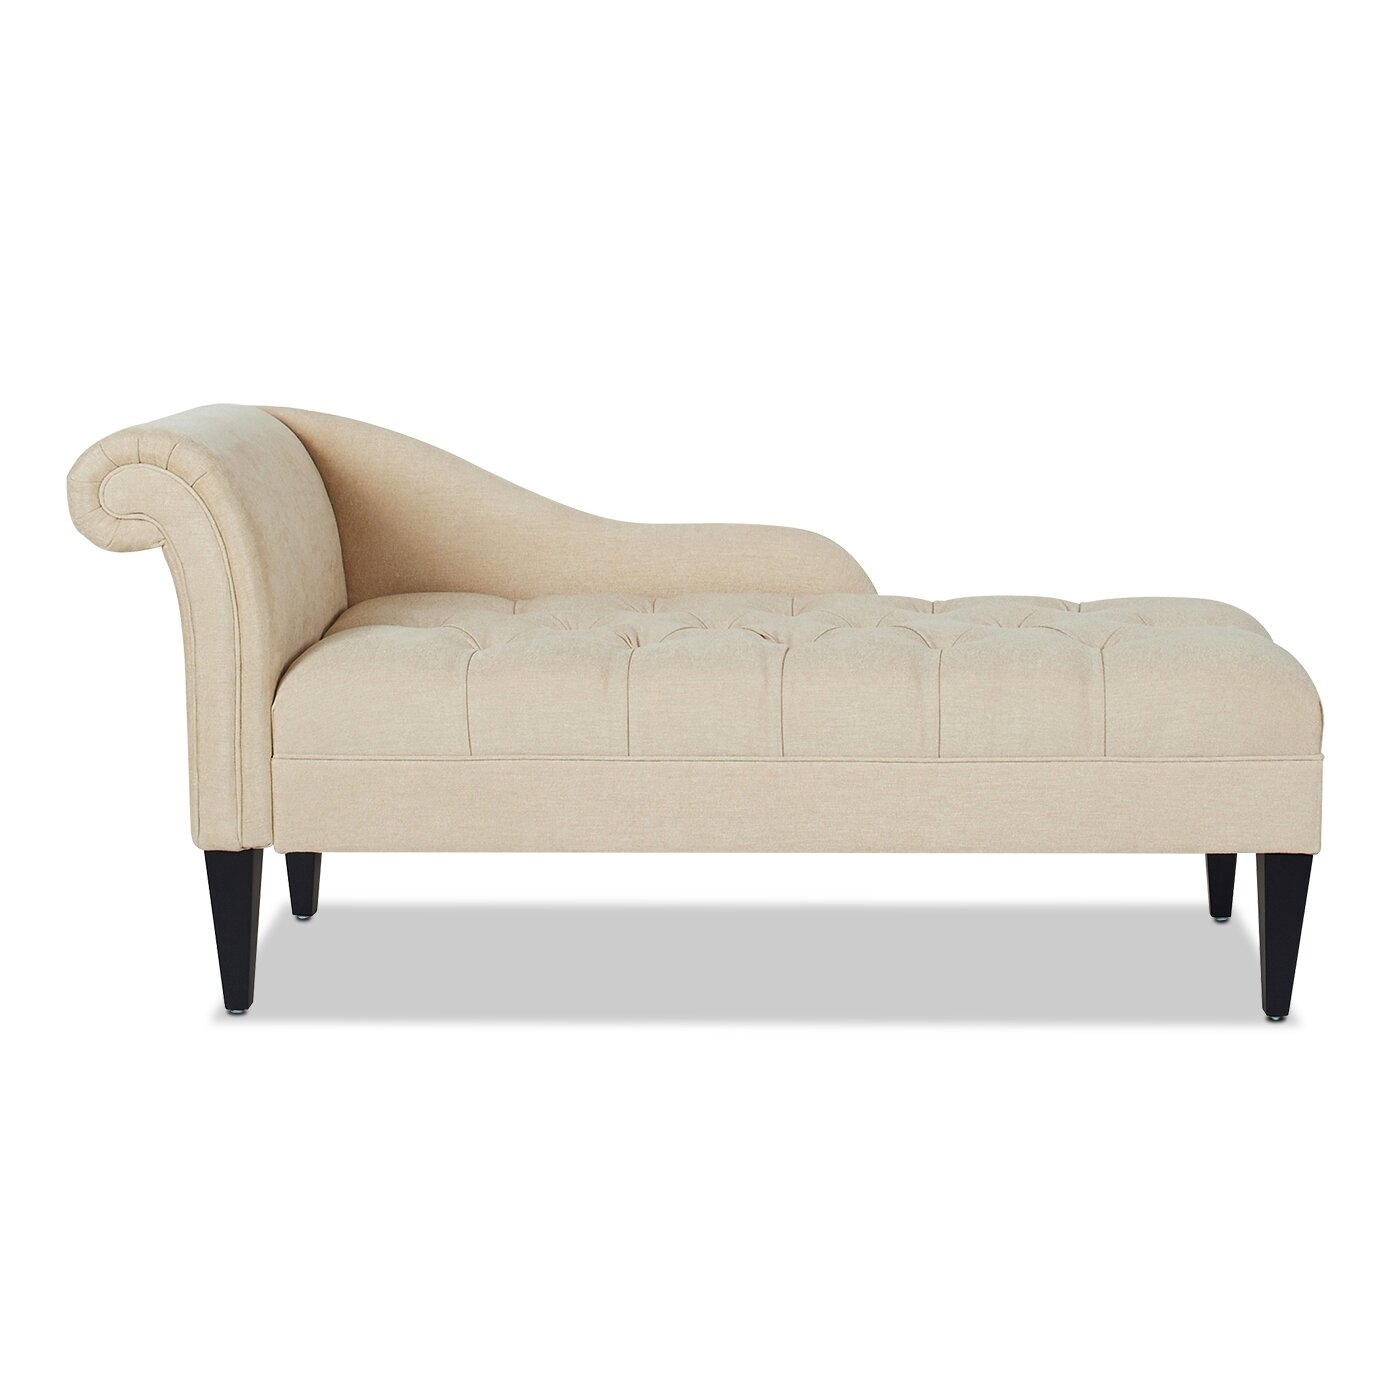 Ainara Upholstered Chaise Lounge - Image 0